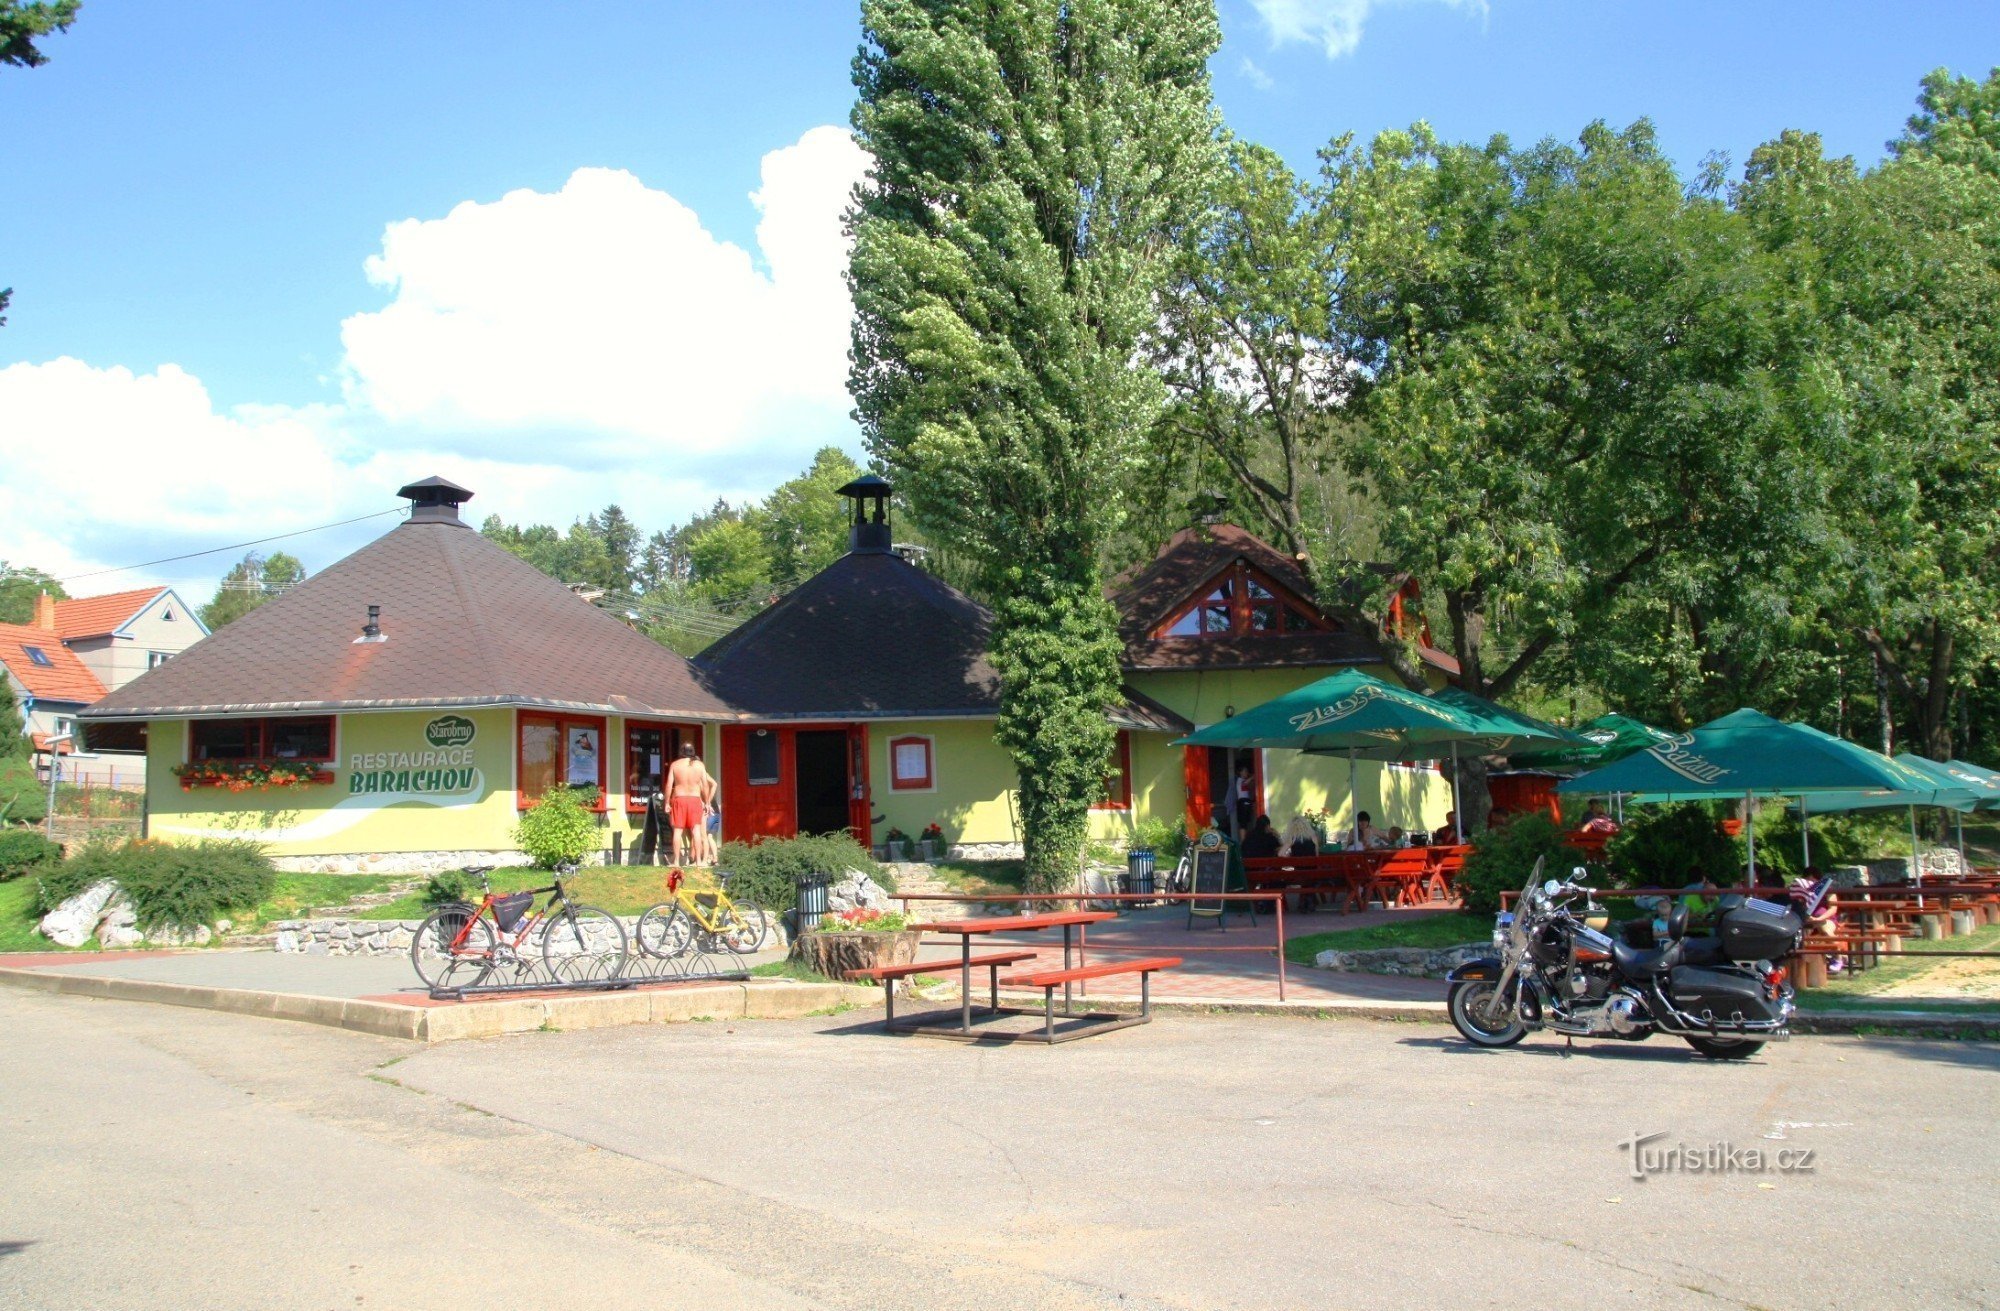 Restauracja Barachów